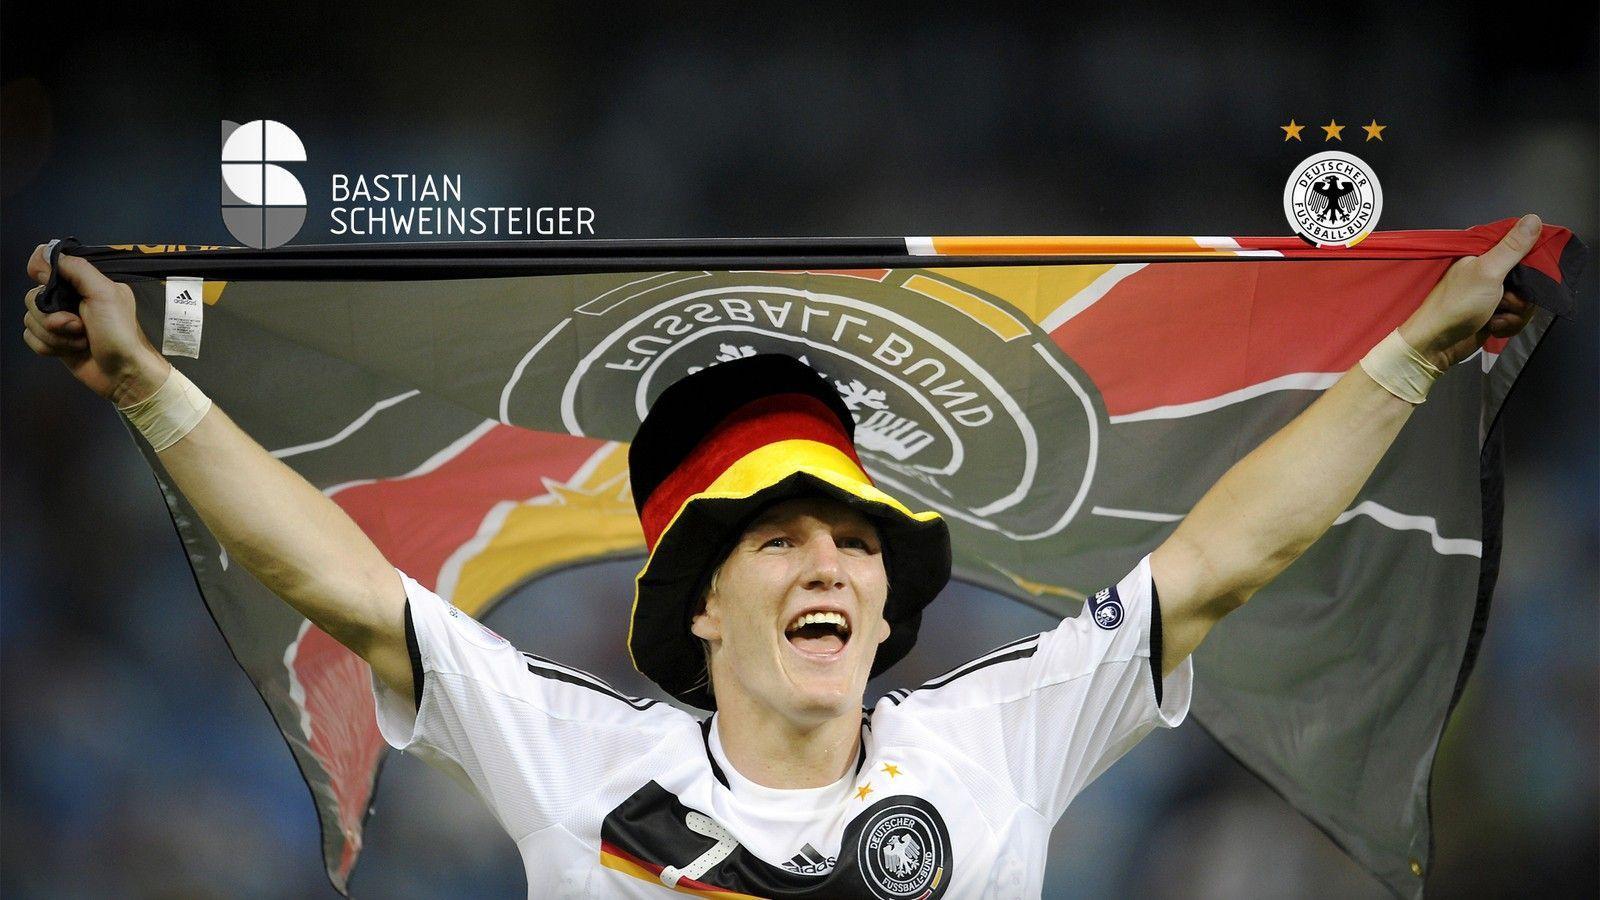 Bastian Schweinsteiger, Footballers, Germany, Soccer Wallpaper HD